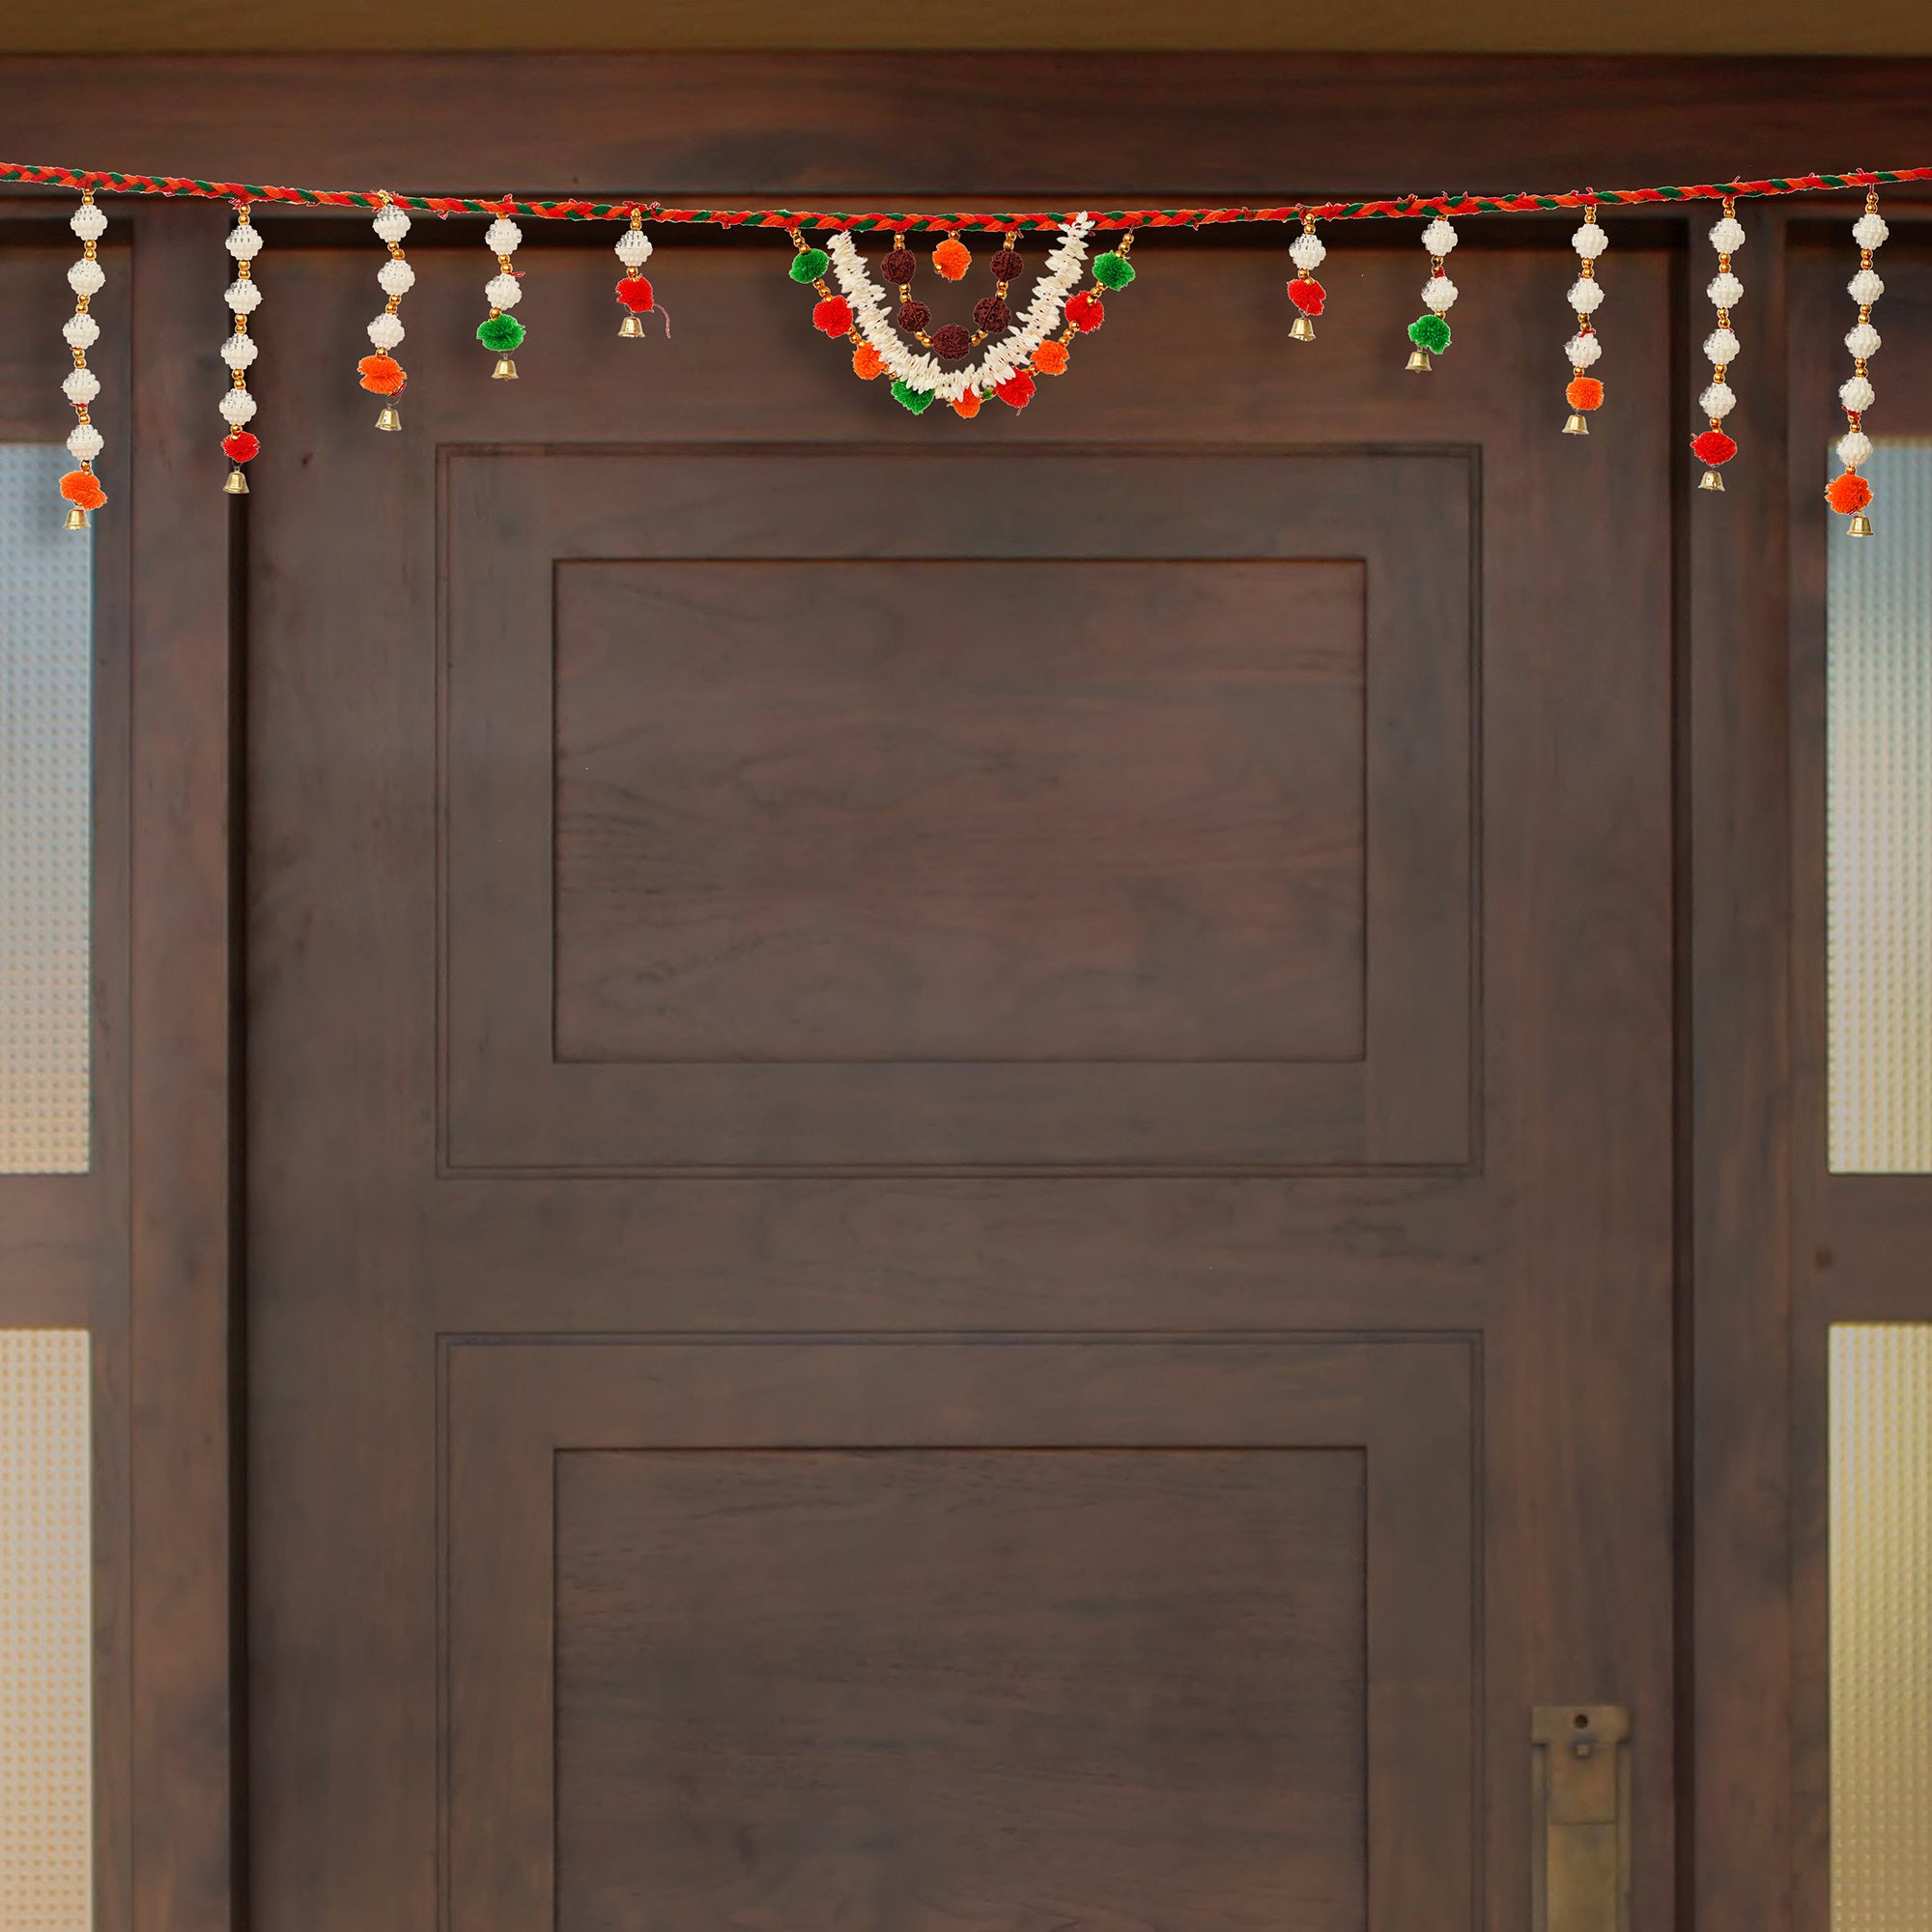 Decorative Colorful Bandarwal/Toran  Door Hanging with Shells and Rudraksh